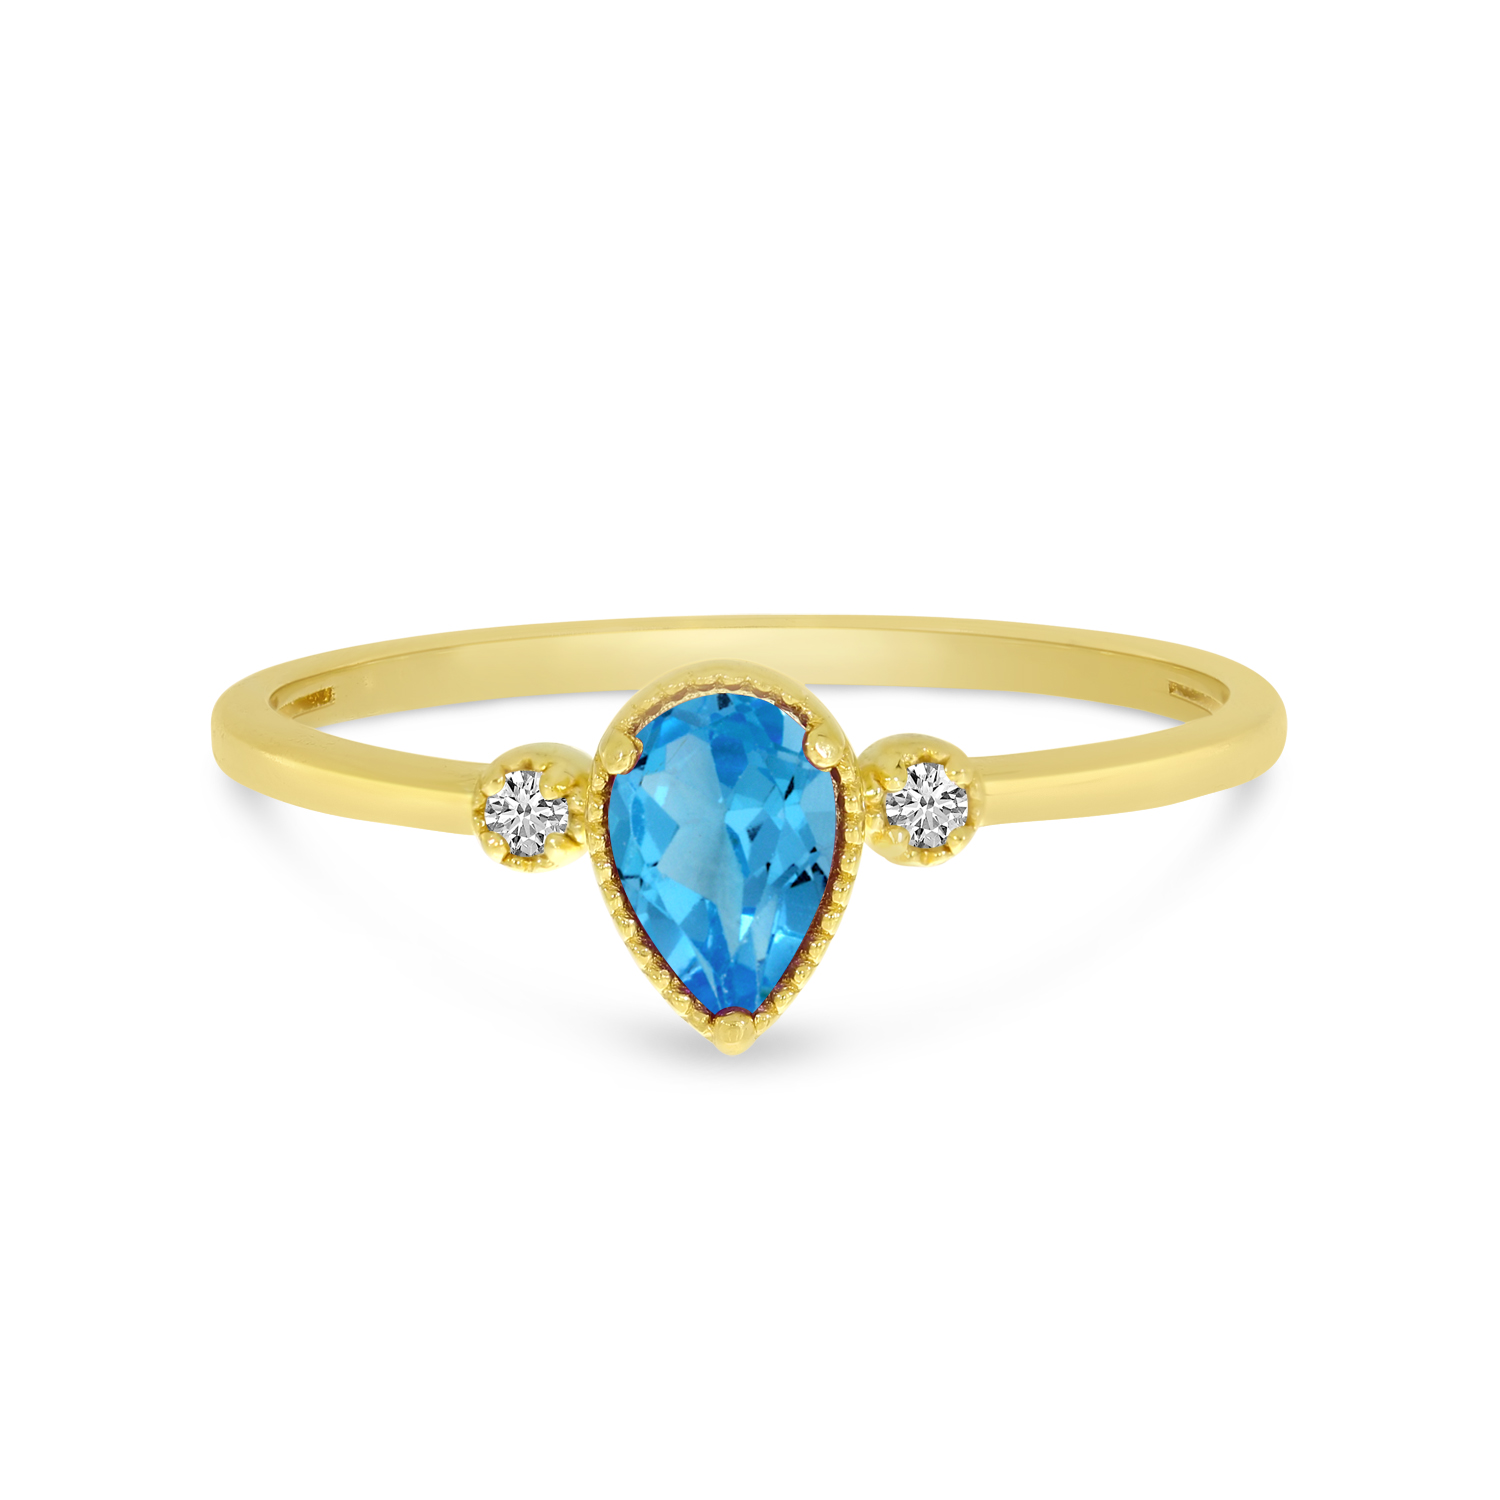 14K Yellow Gold Pear Blue Topaz Birthstone Ring